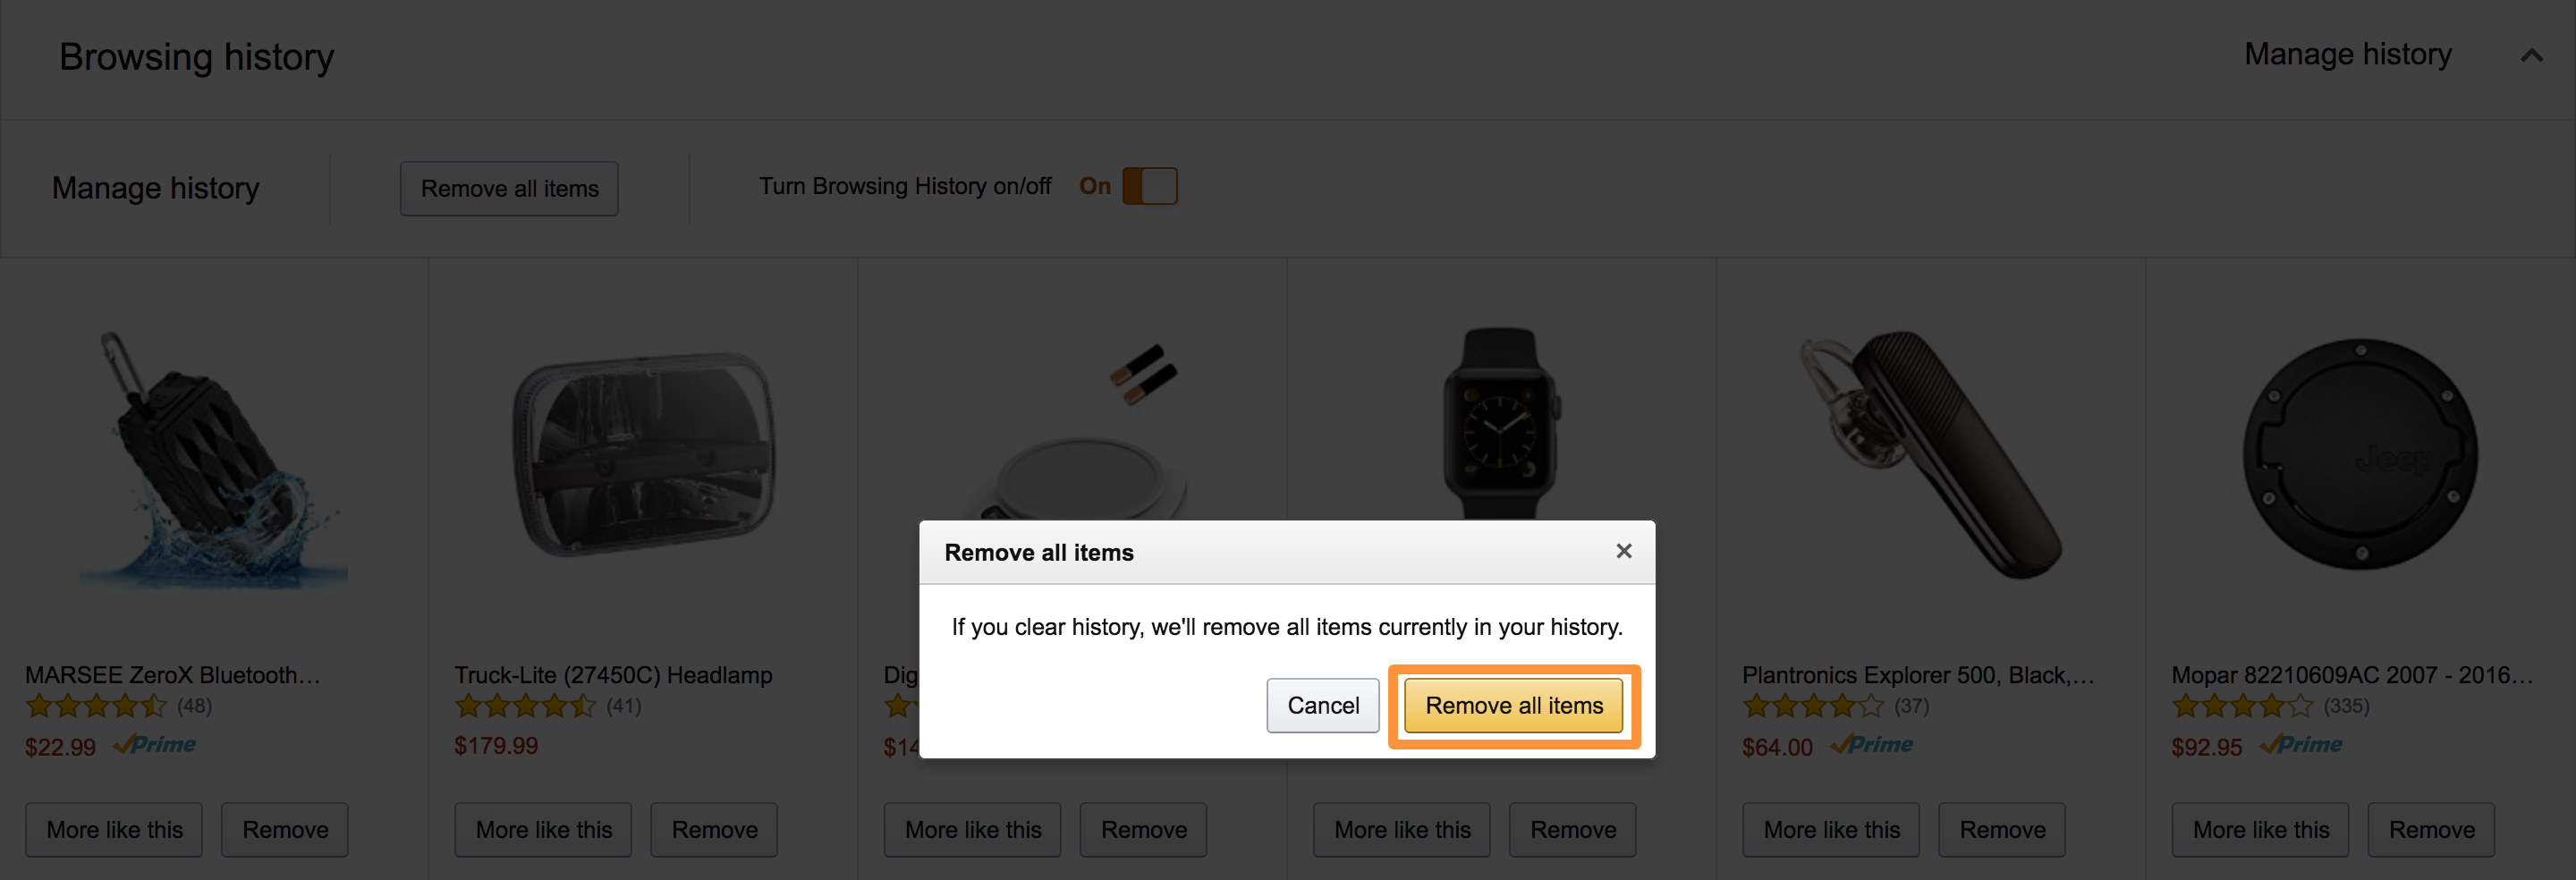 Amazon Com Browsing History Remove All Items